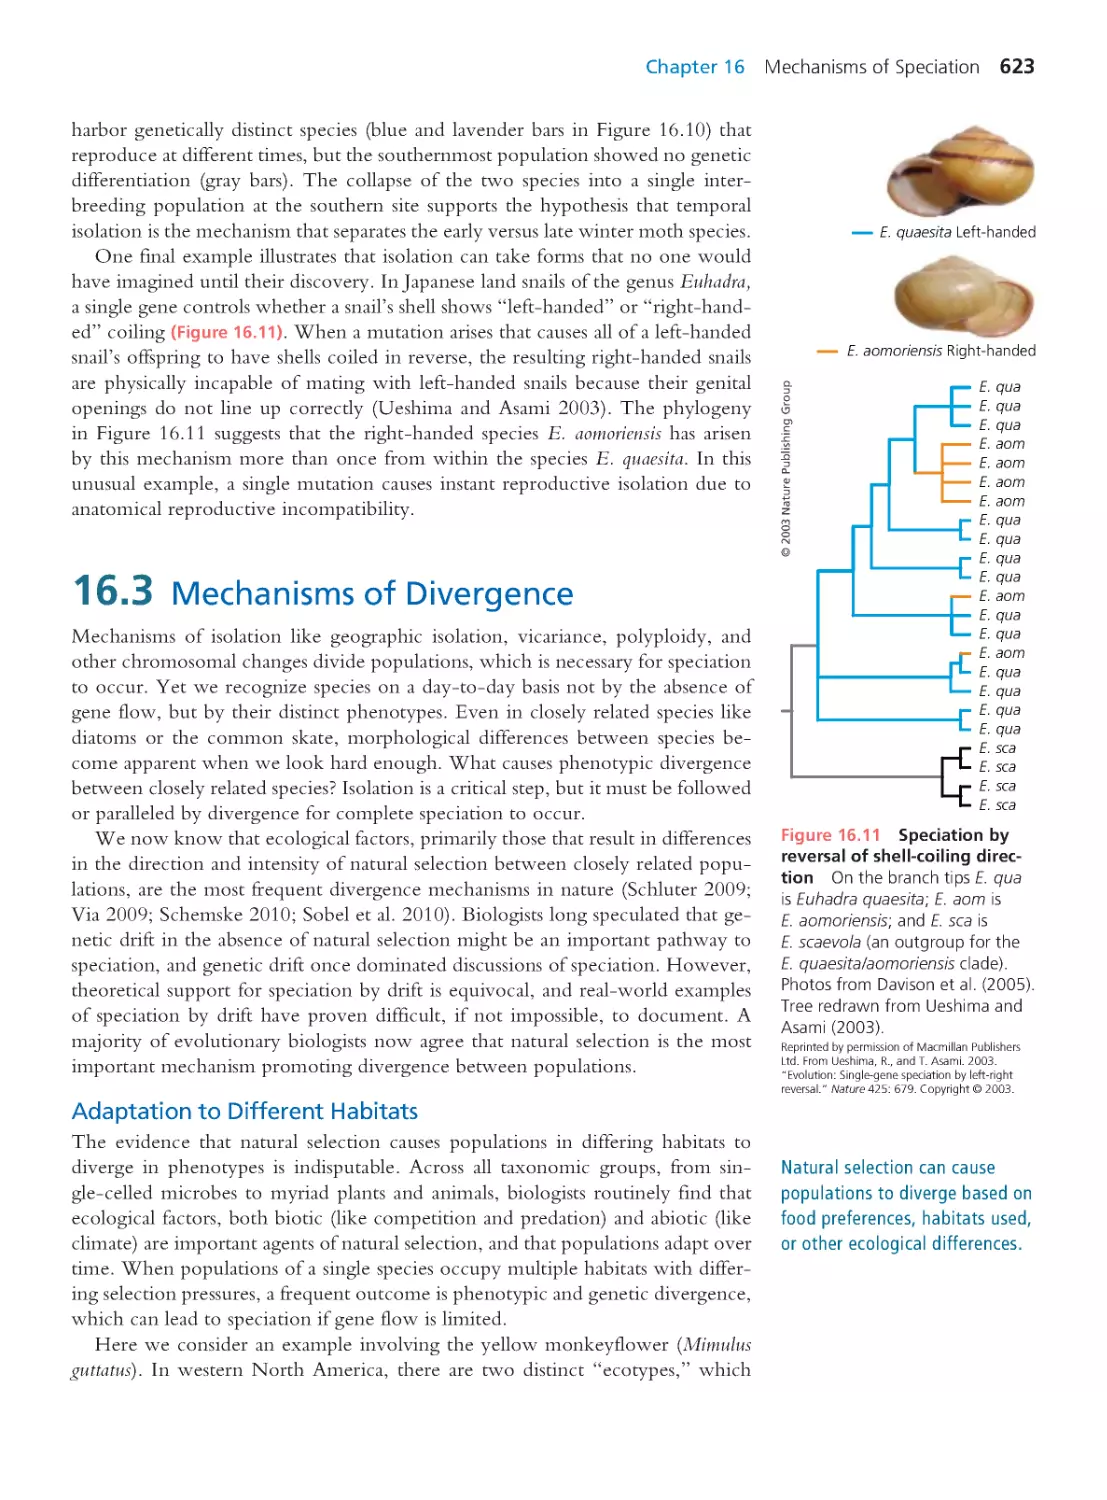 16.3 Mechanisms of Divergence